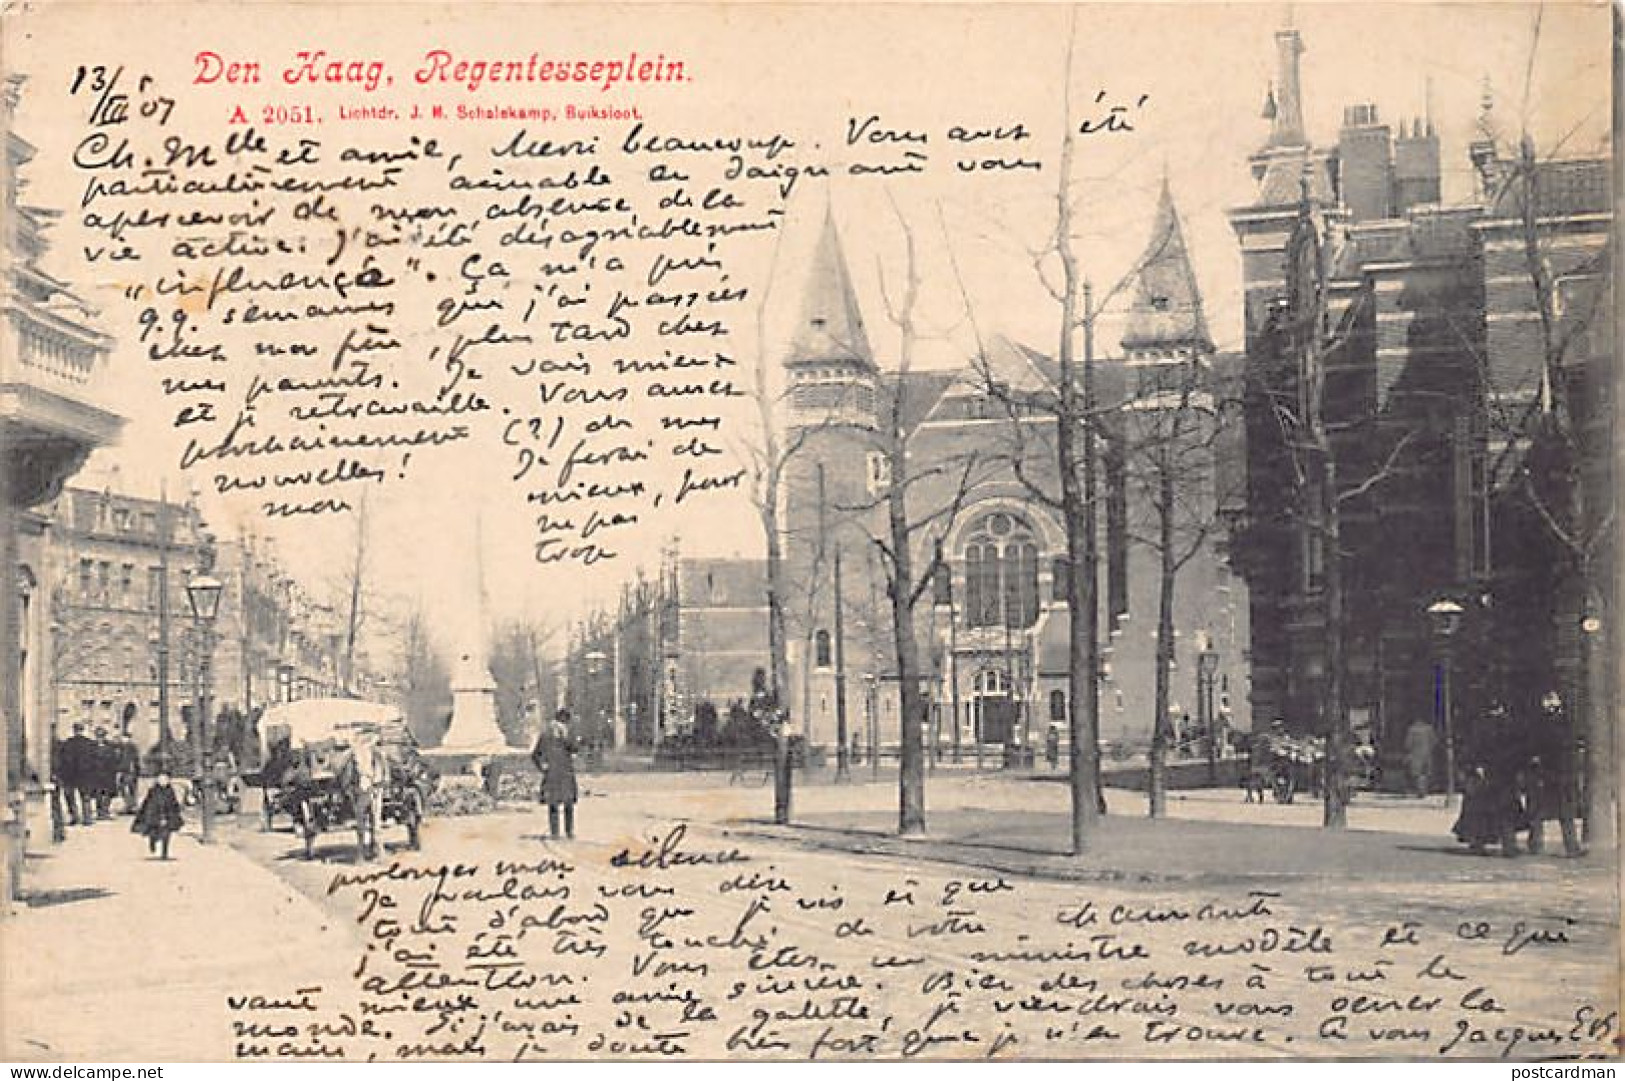 DEN HAAG (ZH) Regentesseplein - Uitg. J. M. Schalekamp 2051 - Den Haag ('s-Gravenhage)